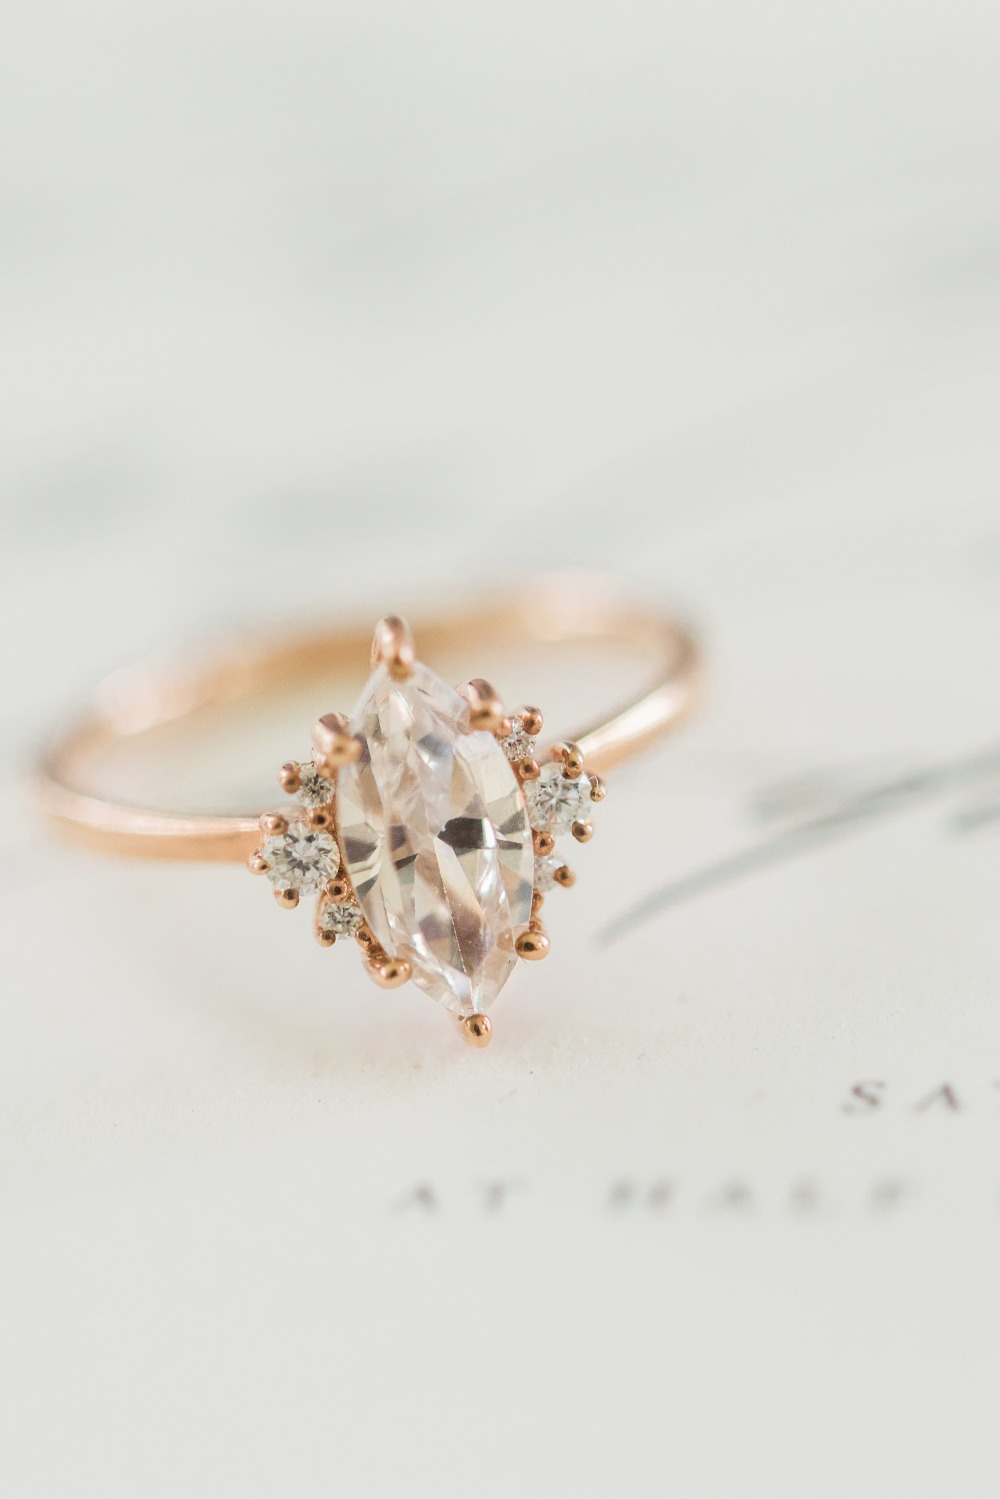 Stunning diamond wedding ring